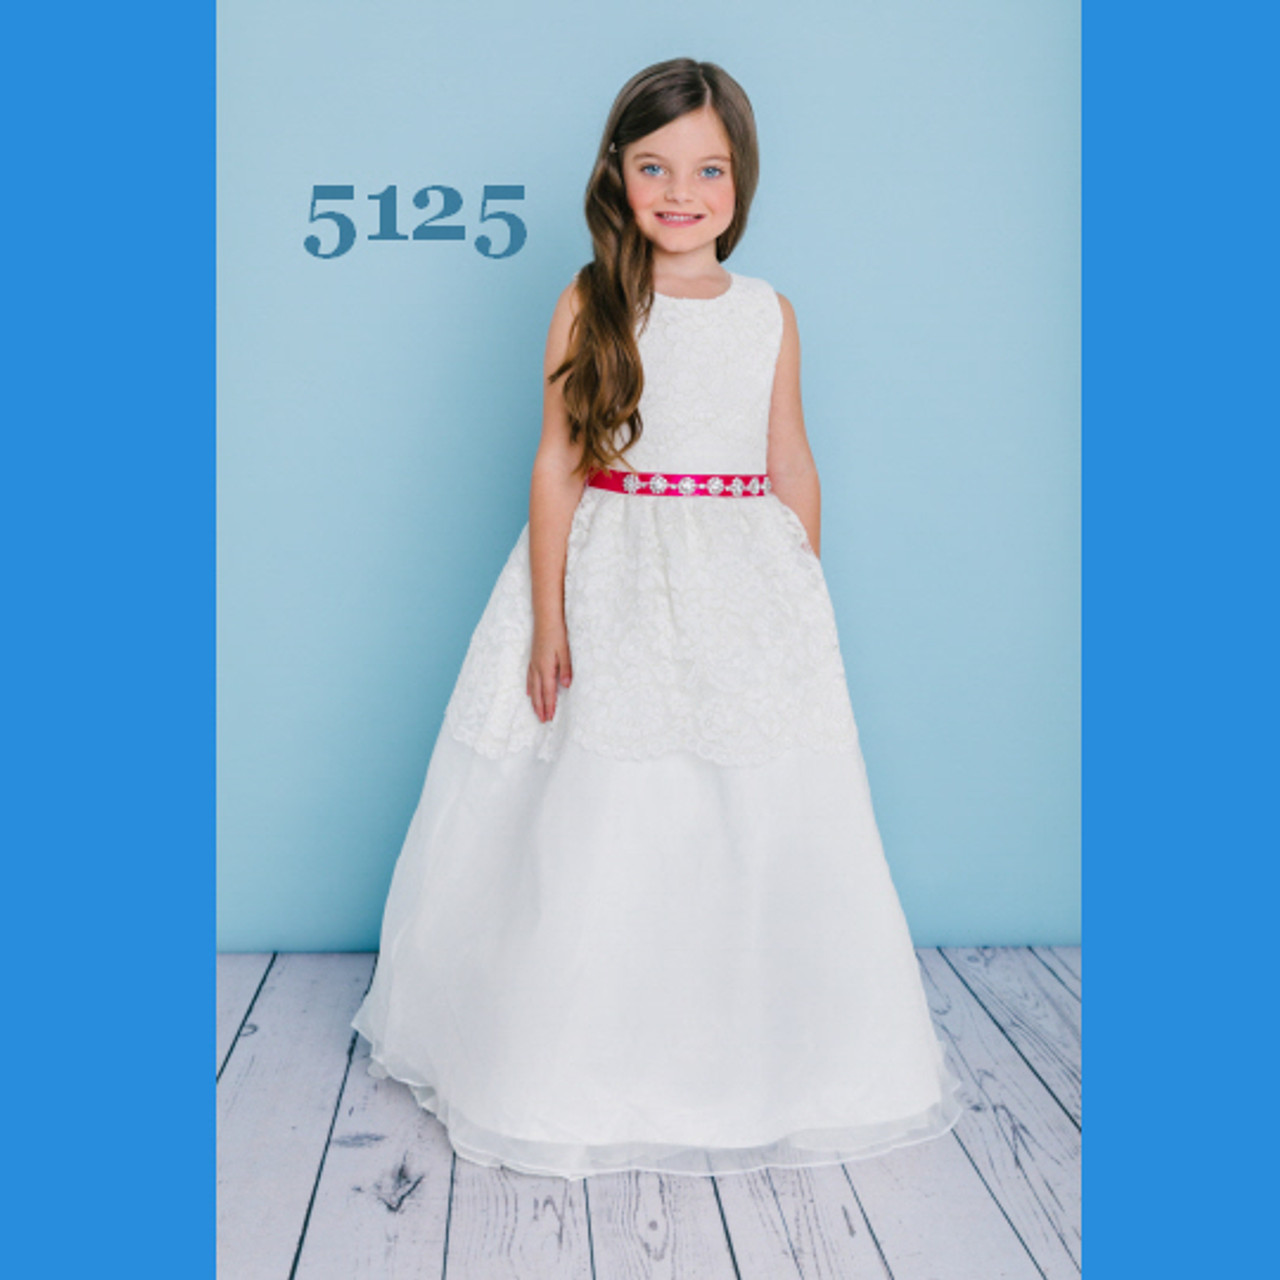 Rosebud Fashions Flower Girl Dresses - Style 5125 - Organza & Lace